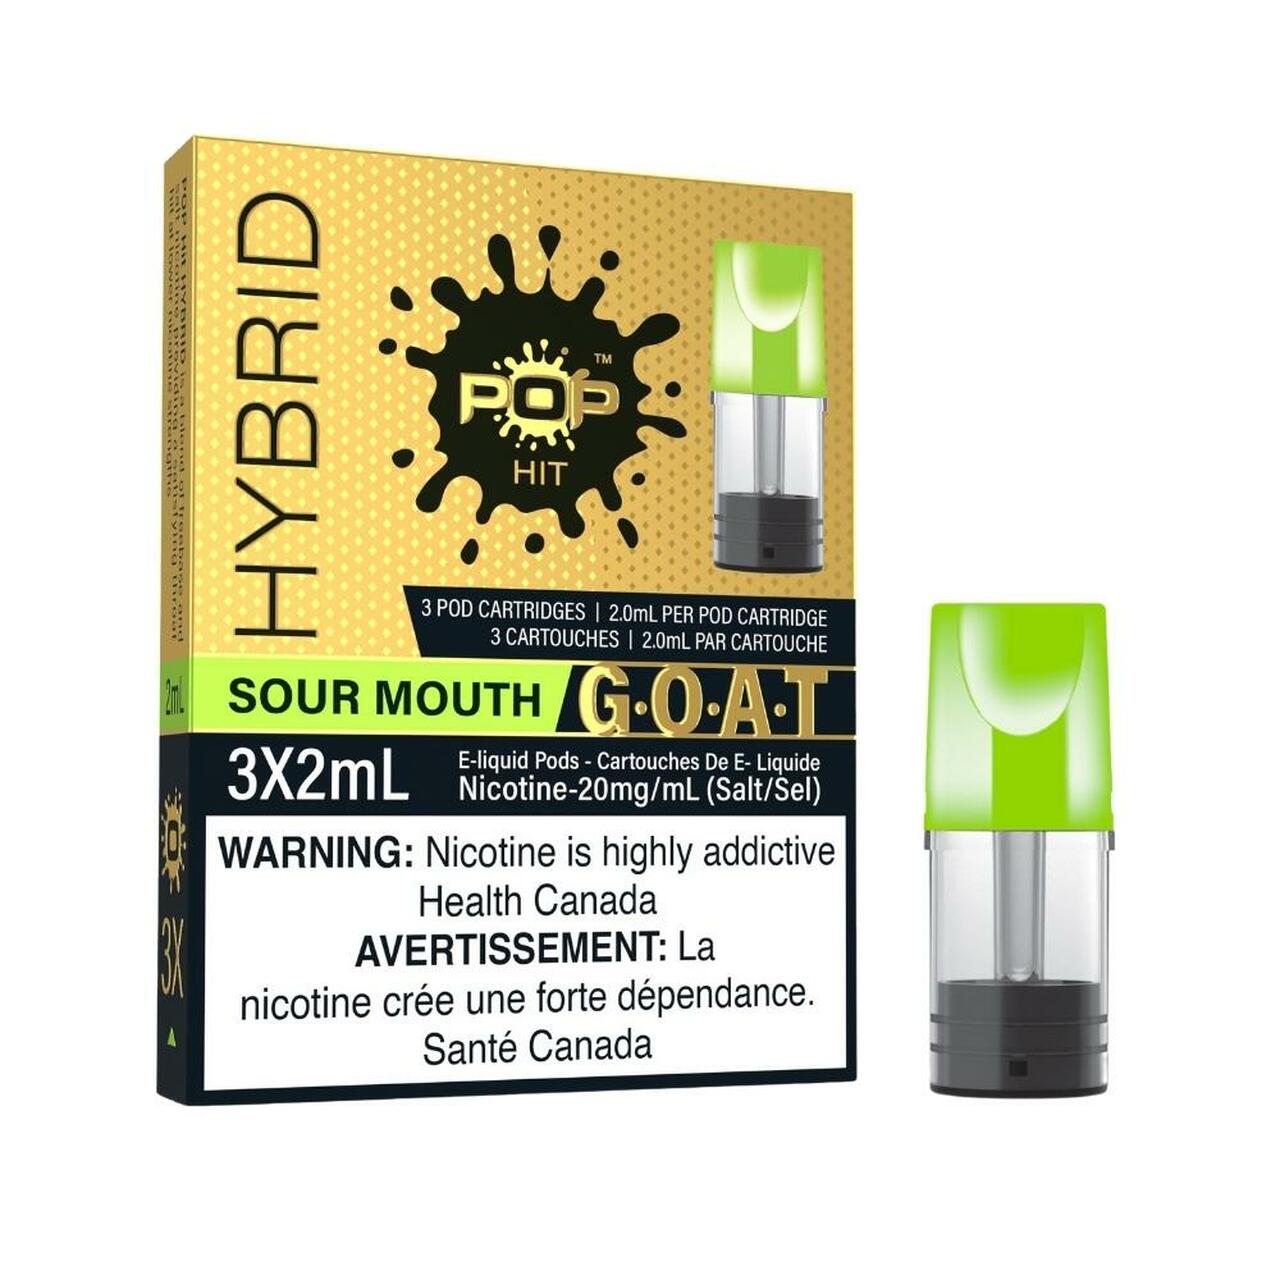 Sour Mouth Pop Pods Hybrid GOAT Series Alliston Newmarket Woodbridge Vaughan GTA Toronto Ontario Canada